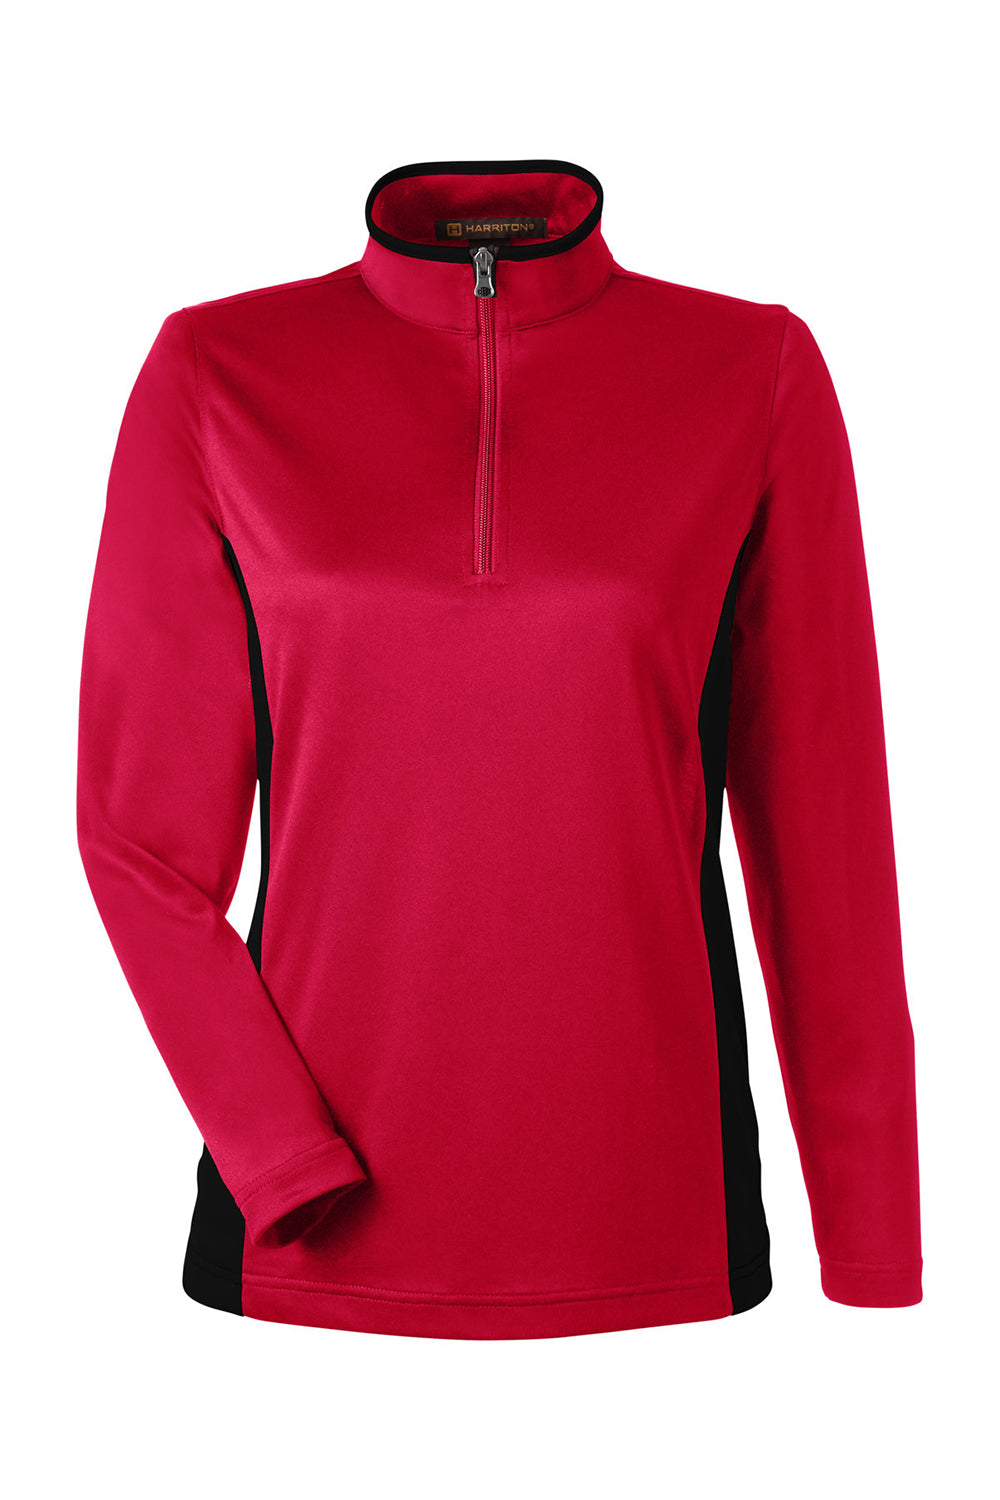 Harriton M786W Womens Flash Performance Moisture Wicking Colorblock 1/4 Zip Sweatshirt Red/Black Flat Front